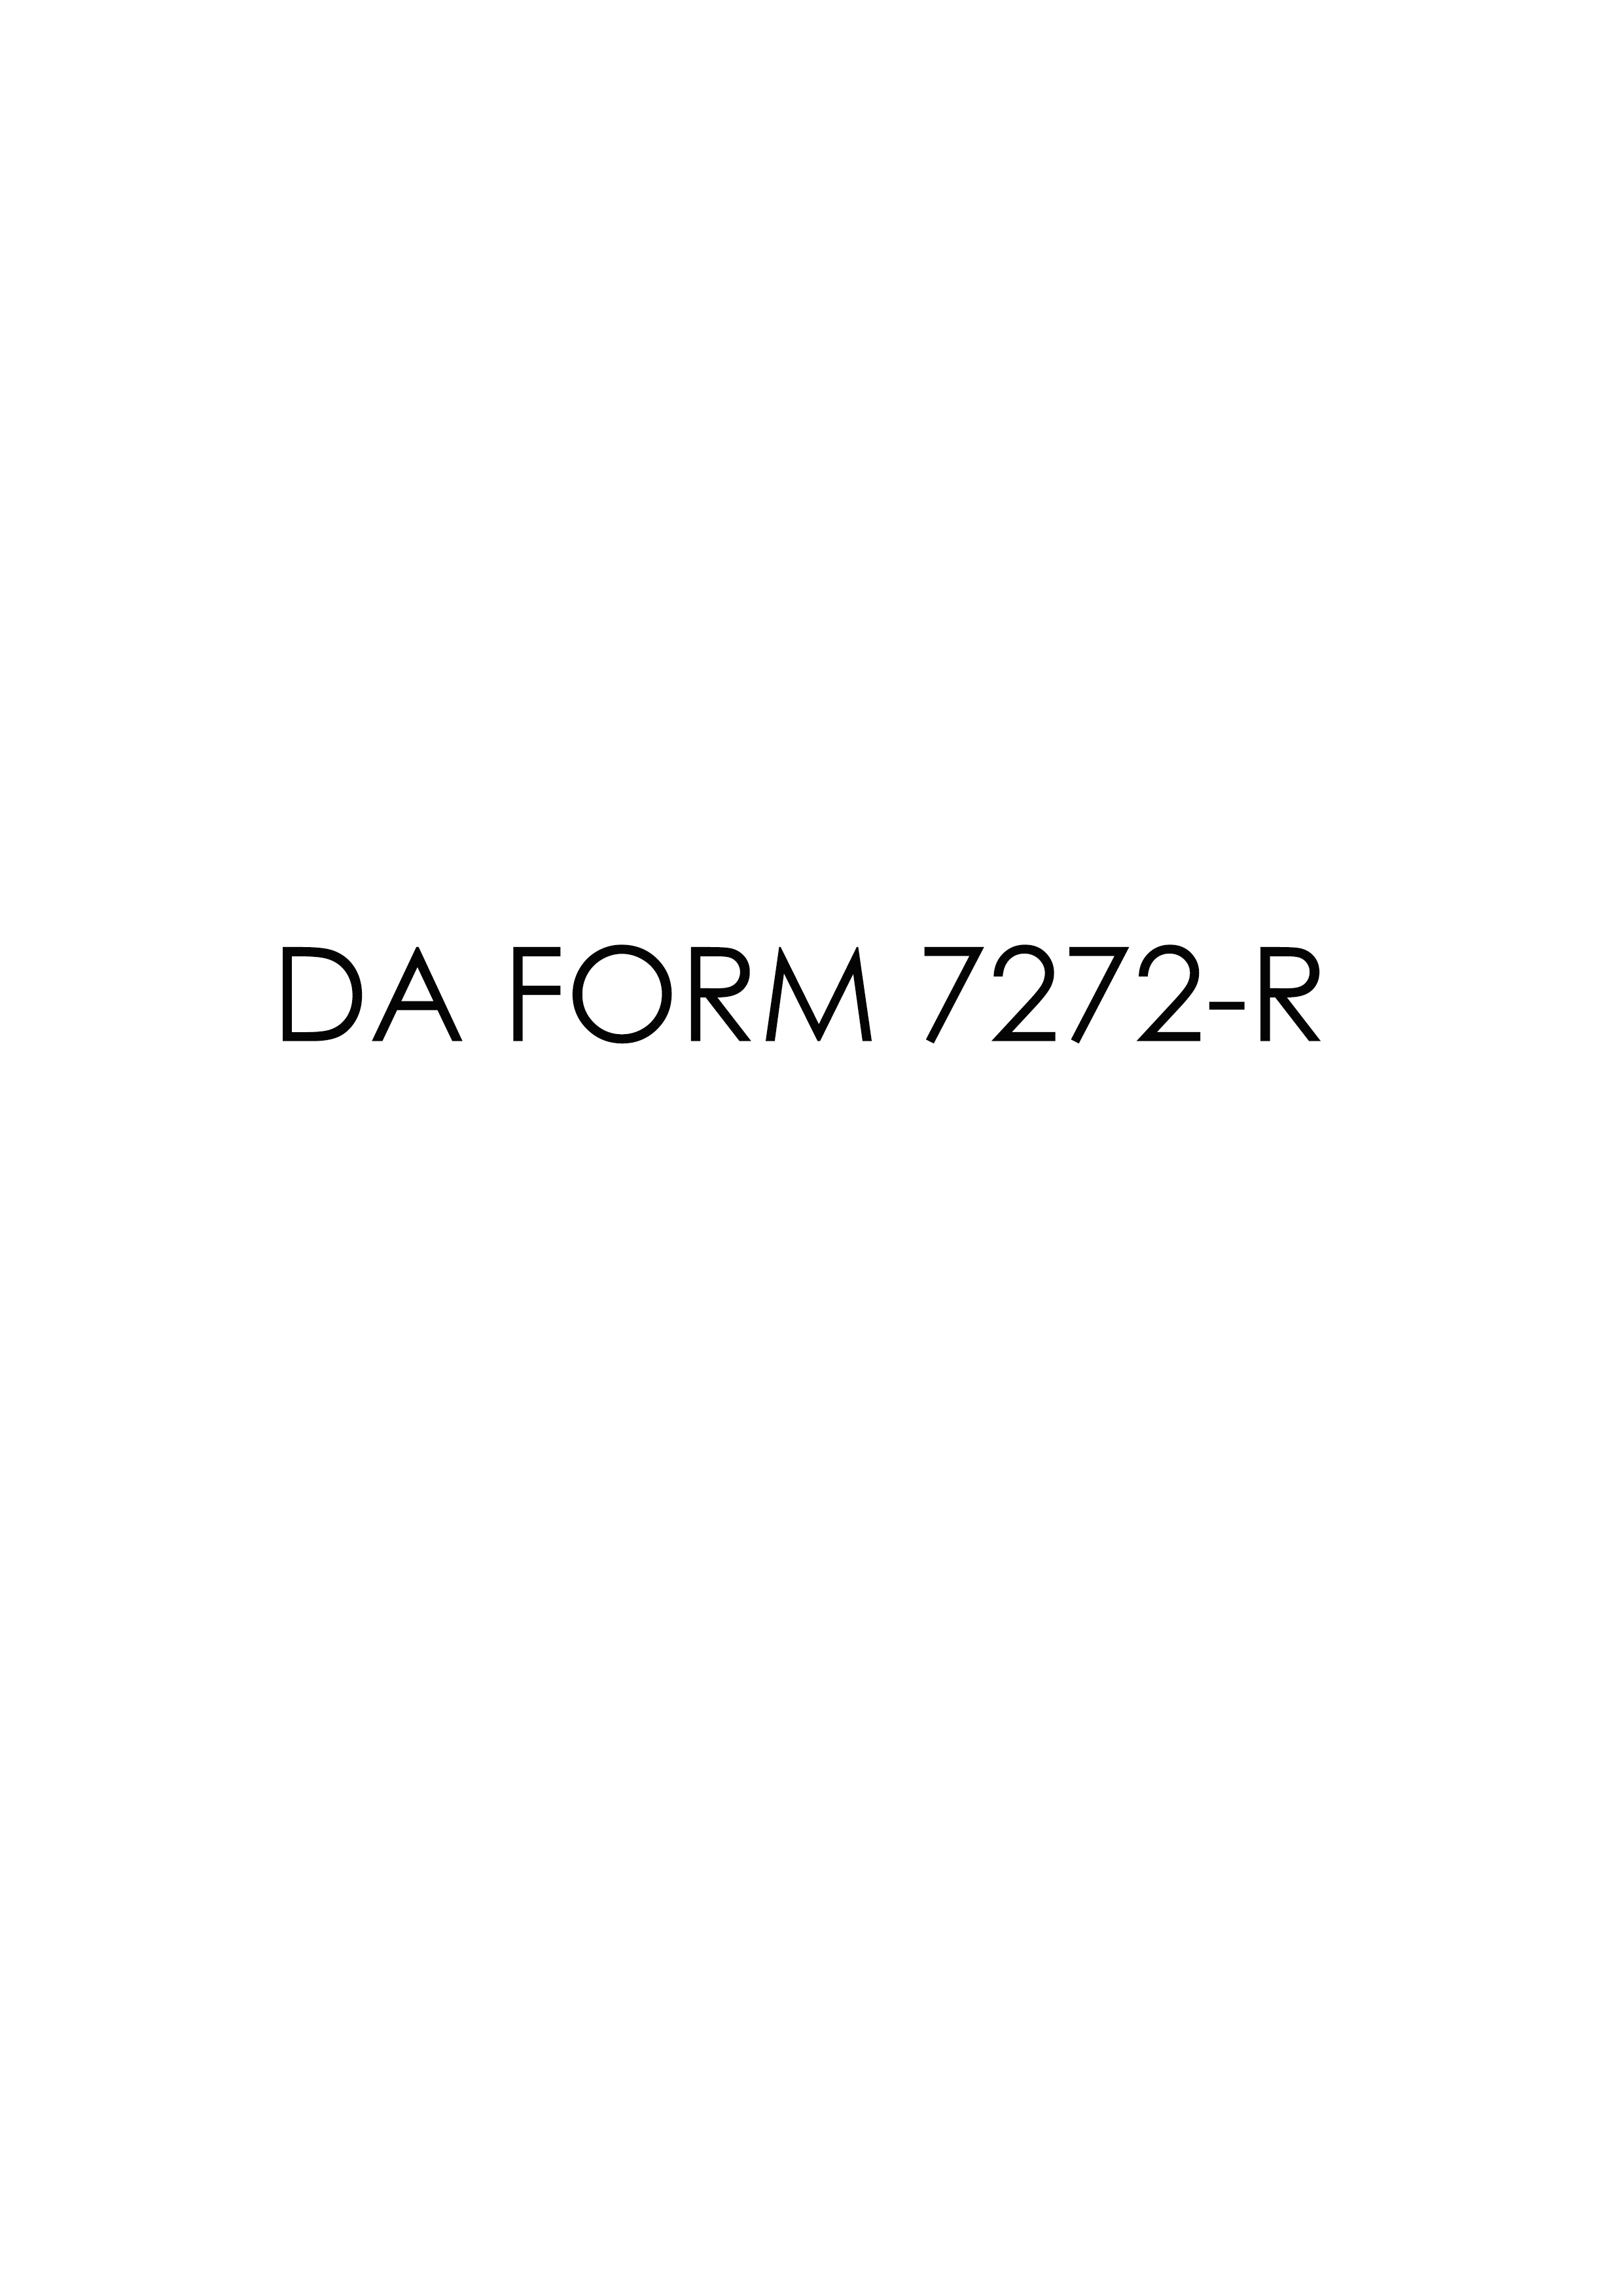 da Form 7272-R fillable